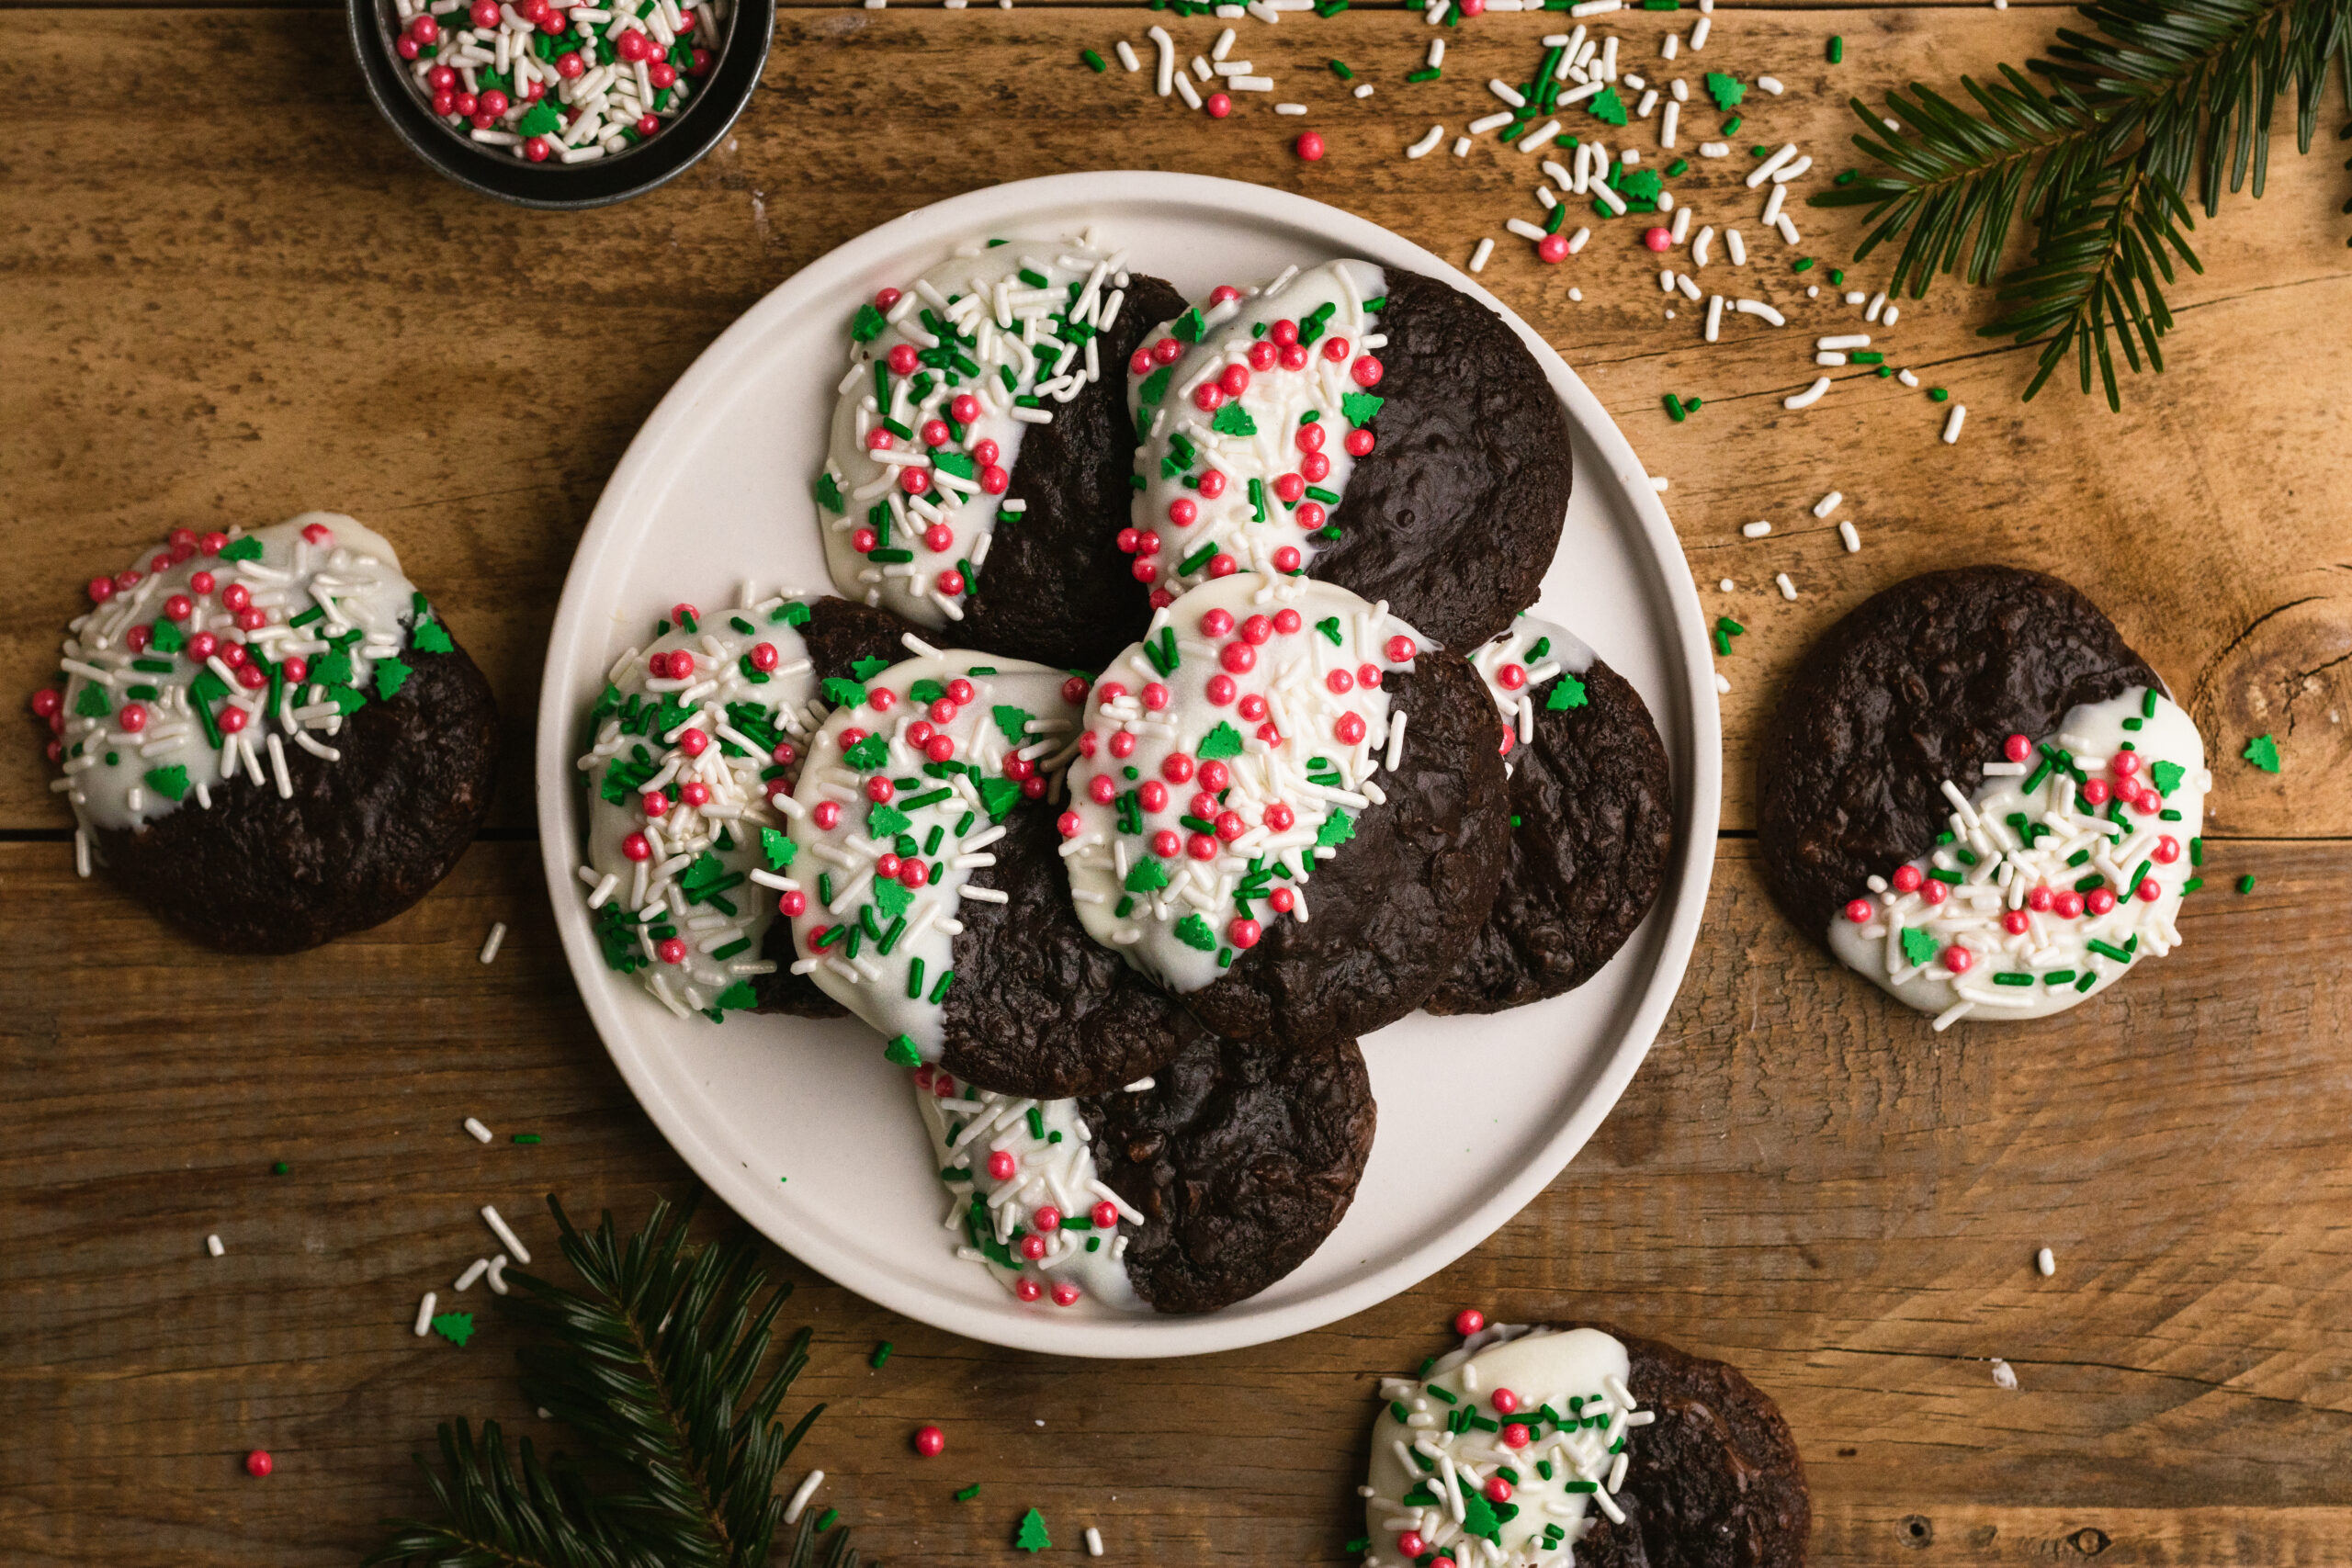 Holiday Christmas Baking Gift Set, Brownies Cookies Oven Mitt